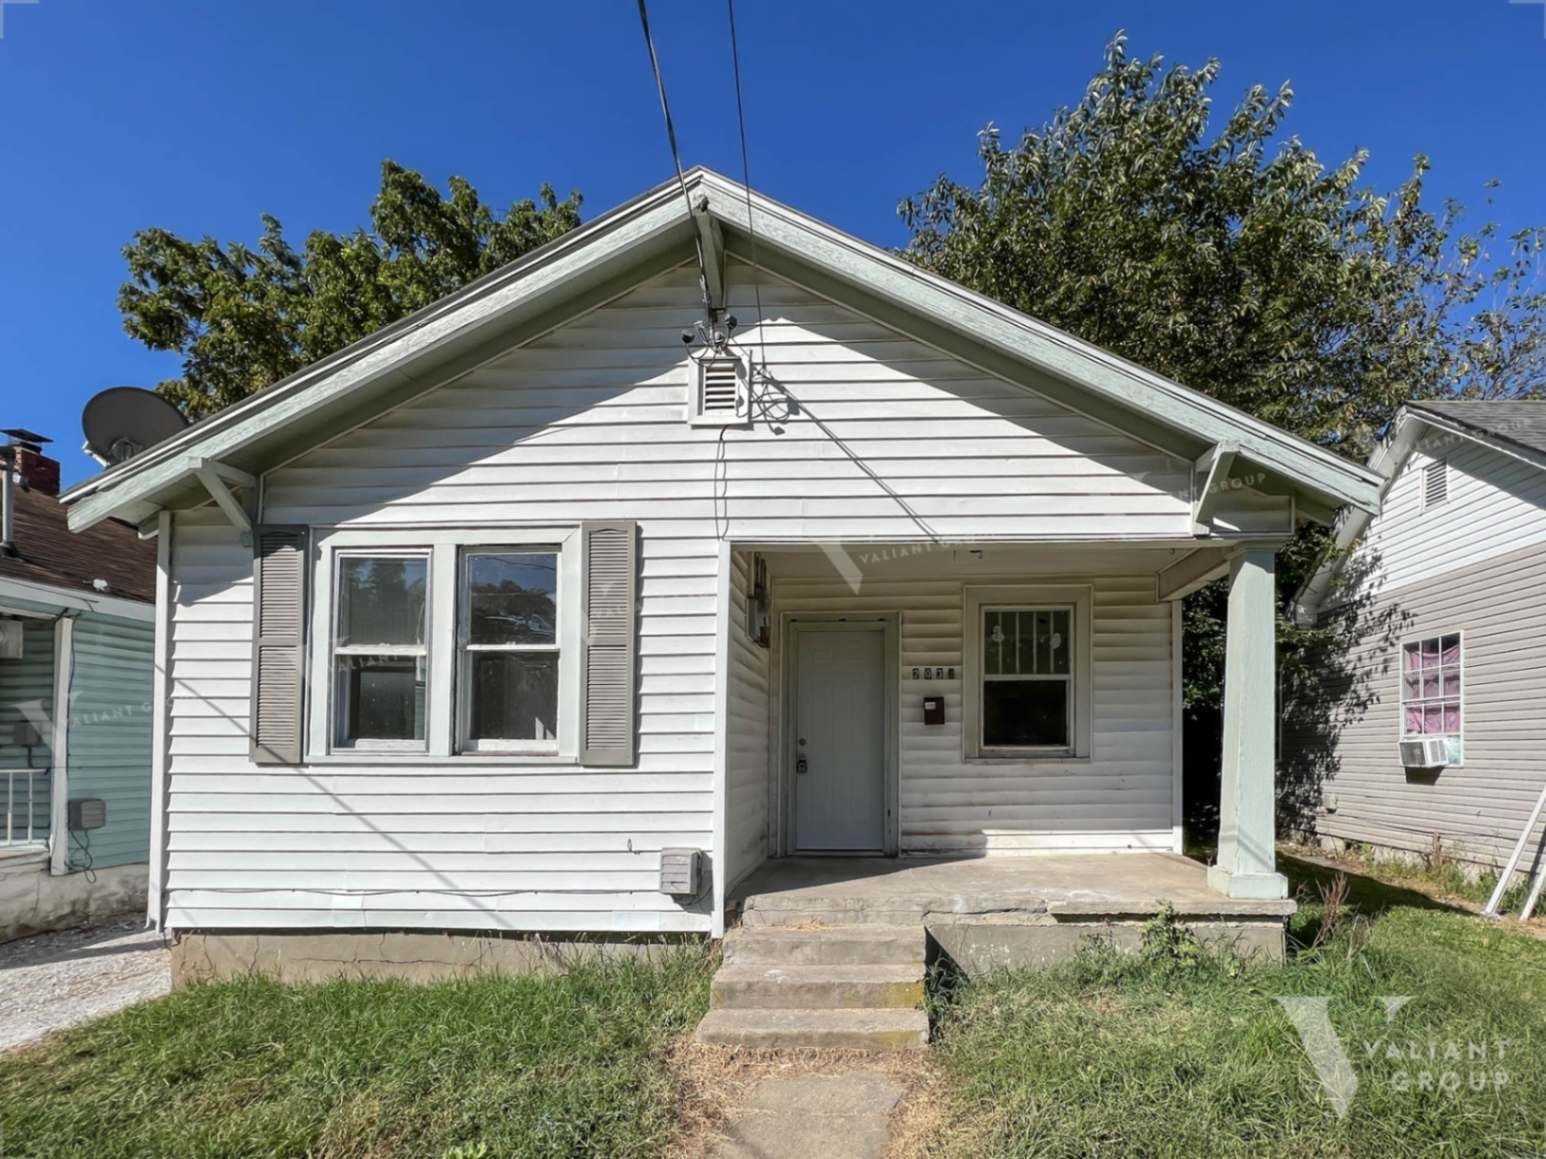 jpeg-optimizer_Rental House in Springfield Missouri - 2033 North Boonville - Exterior Front Door (1).jpg